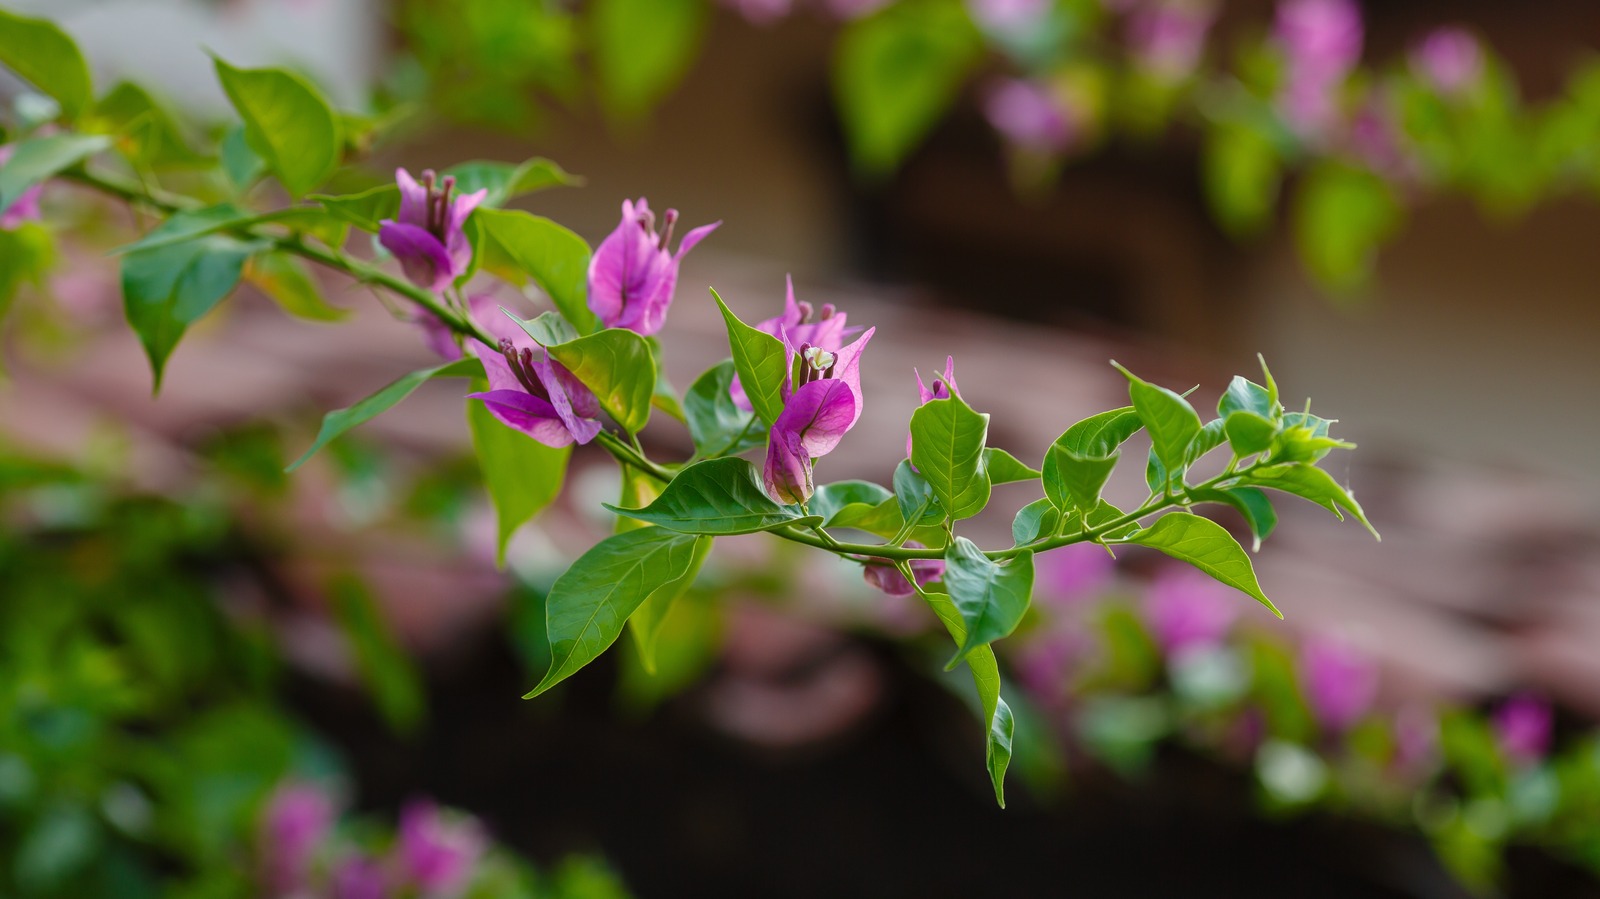 Pruning Bougainvillea: Getting This Flowering Machine to Bloom